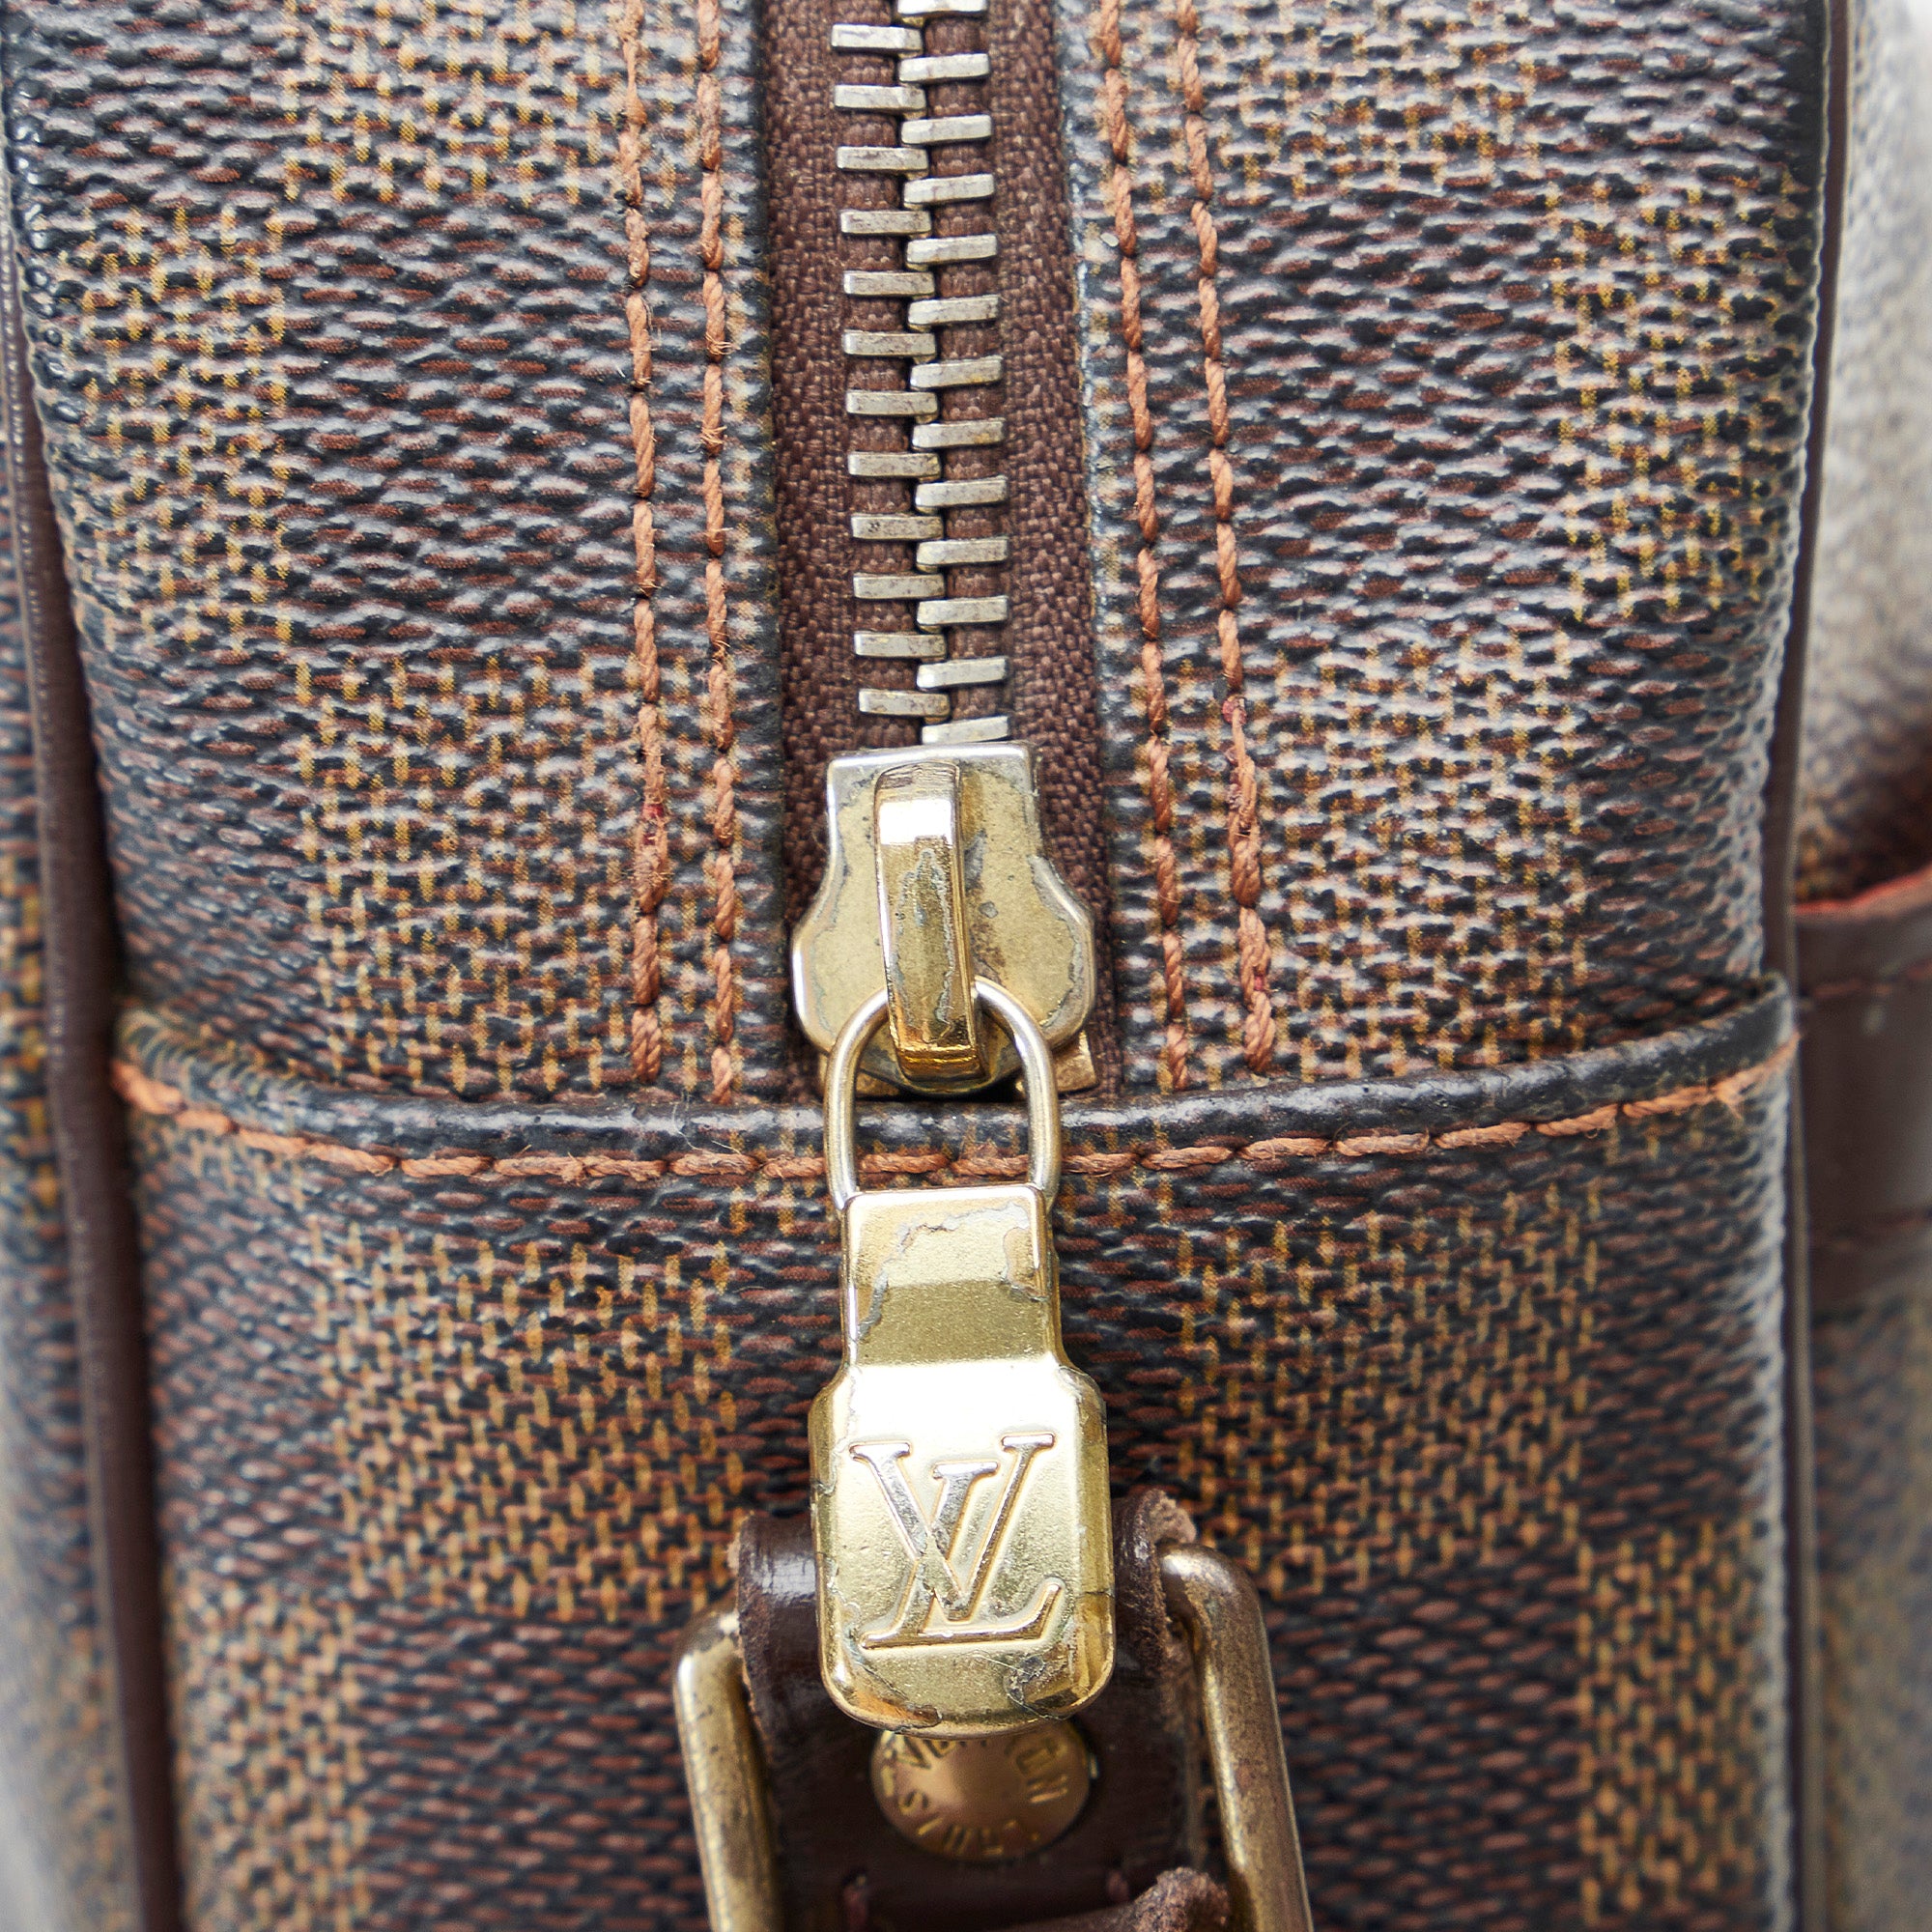 Brown Louis Vuitton Damier Geant Belier Crossbody Bag